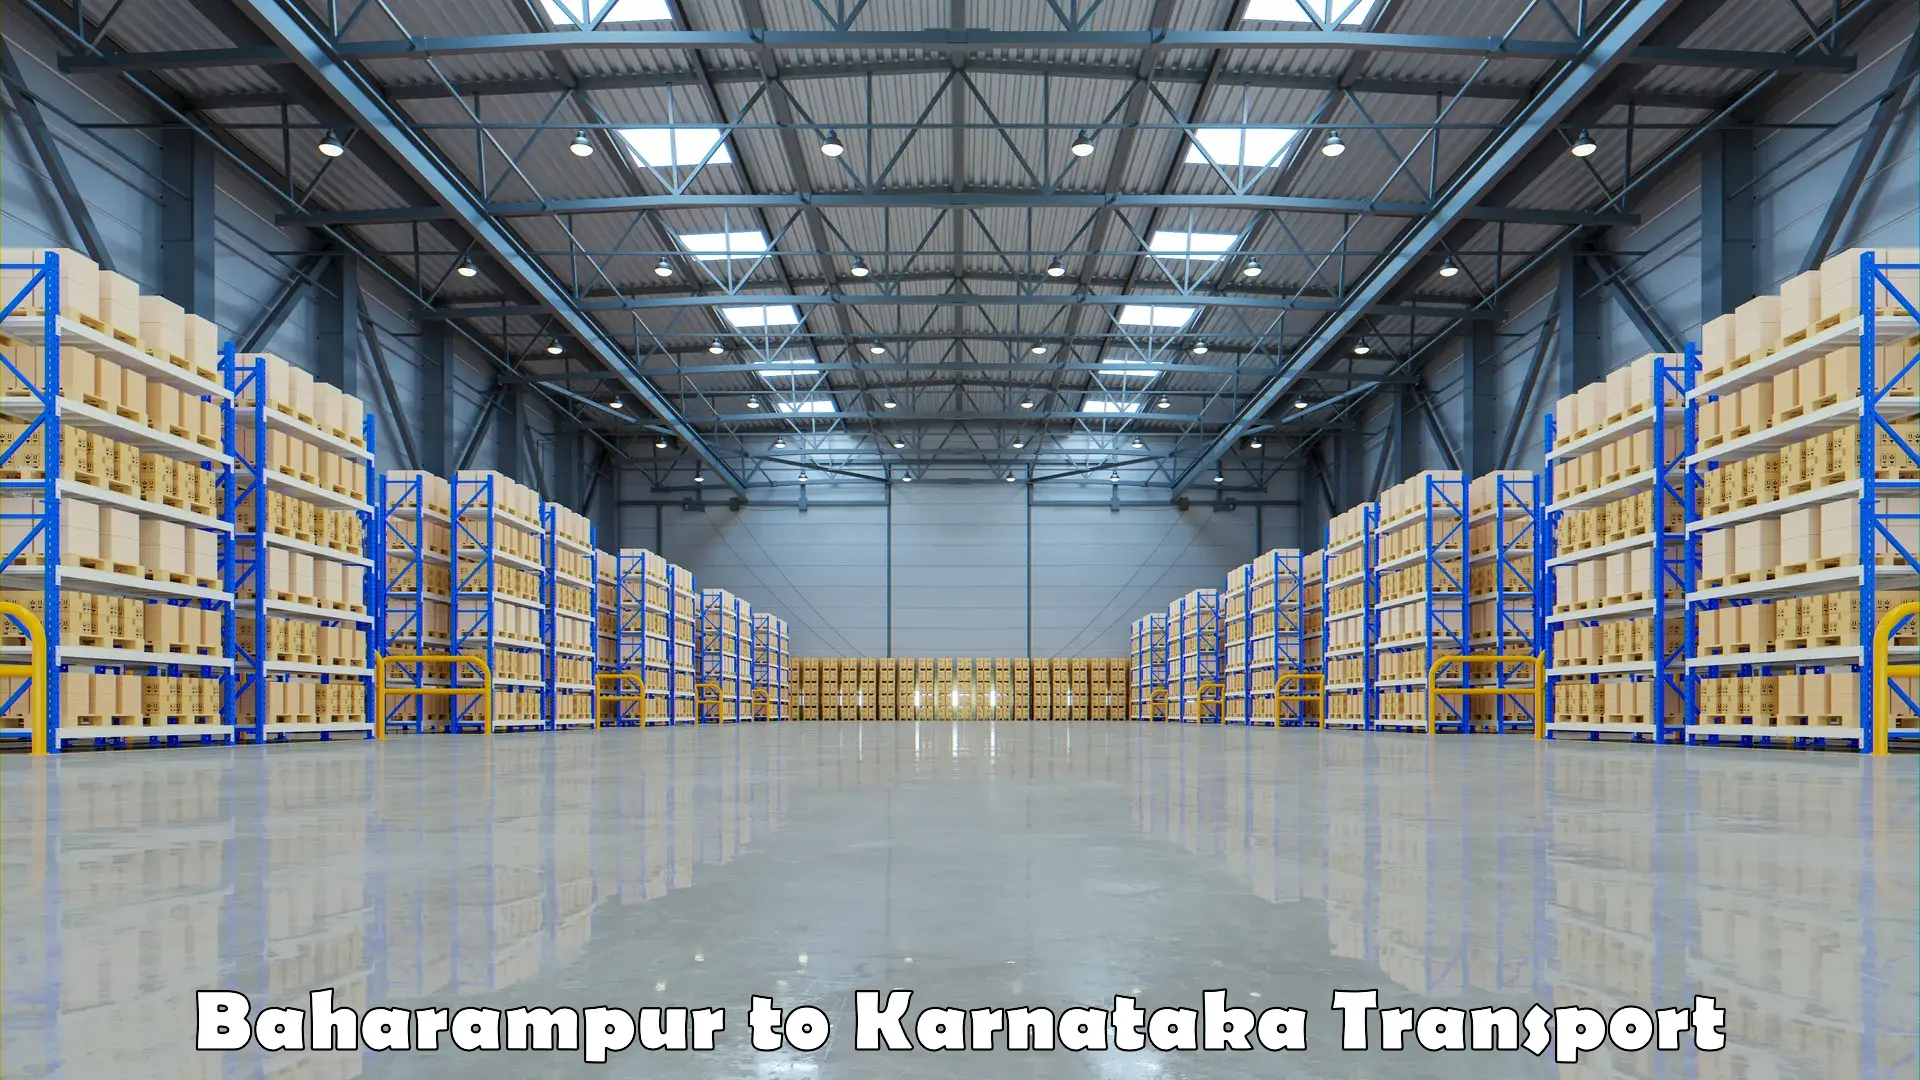 Truck transport companies in India Baharampur to Yenepoya Mangalore